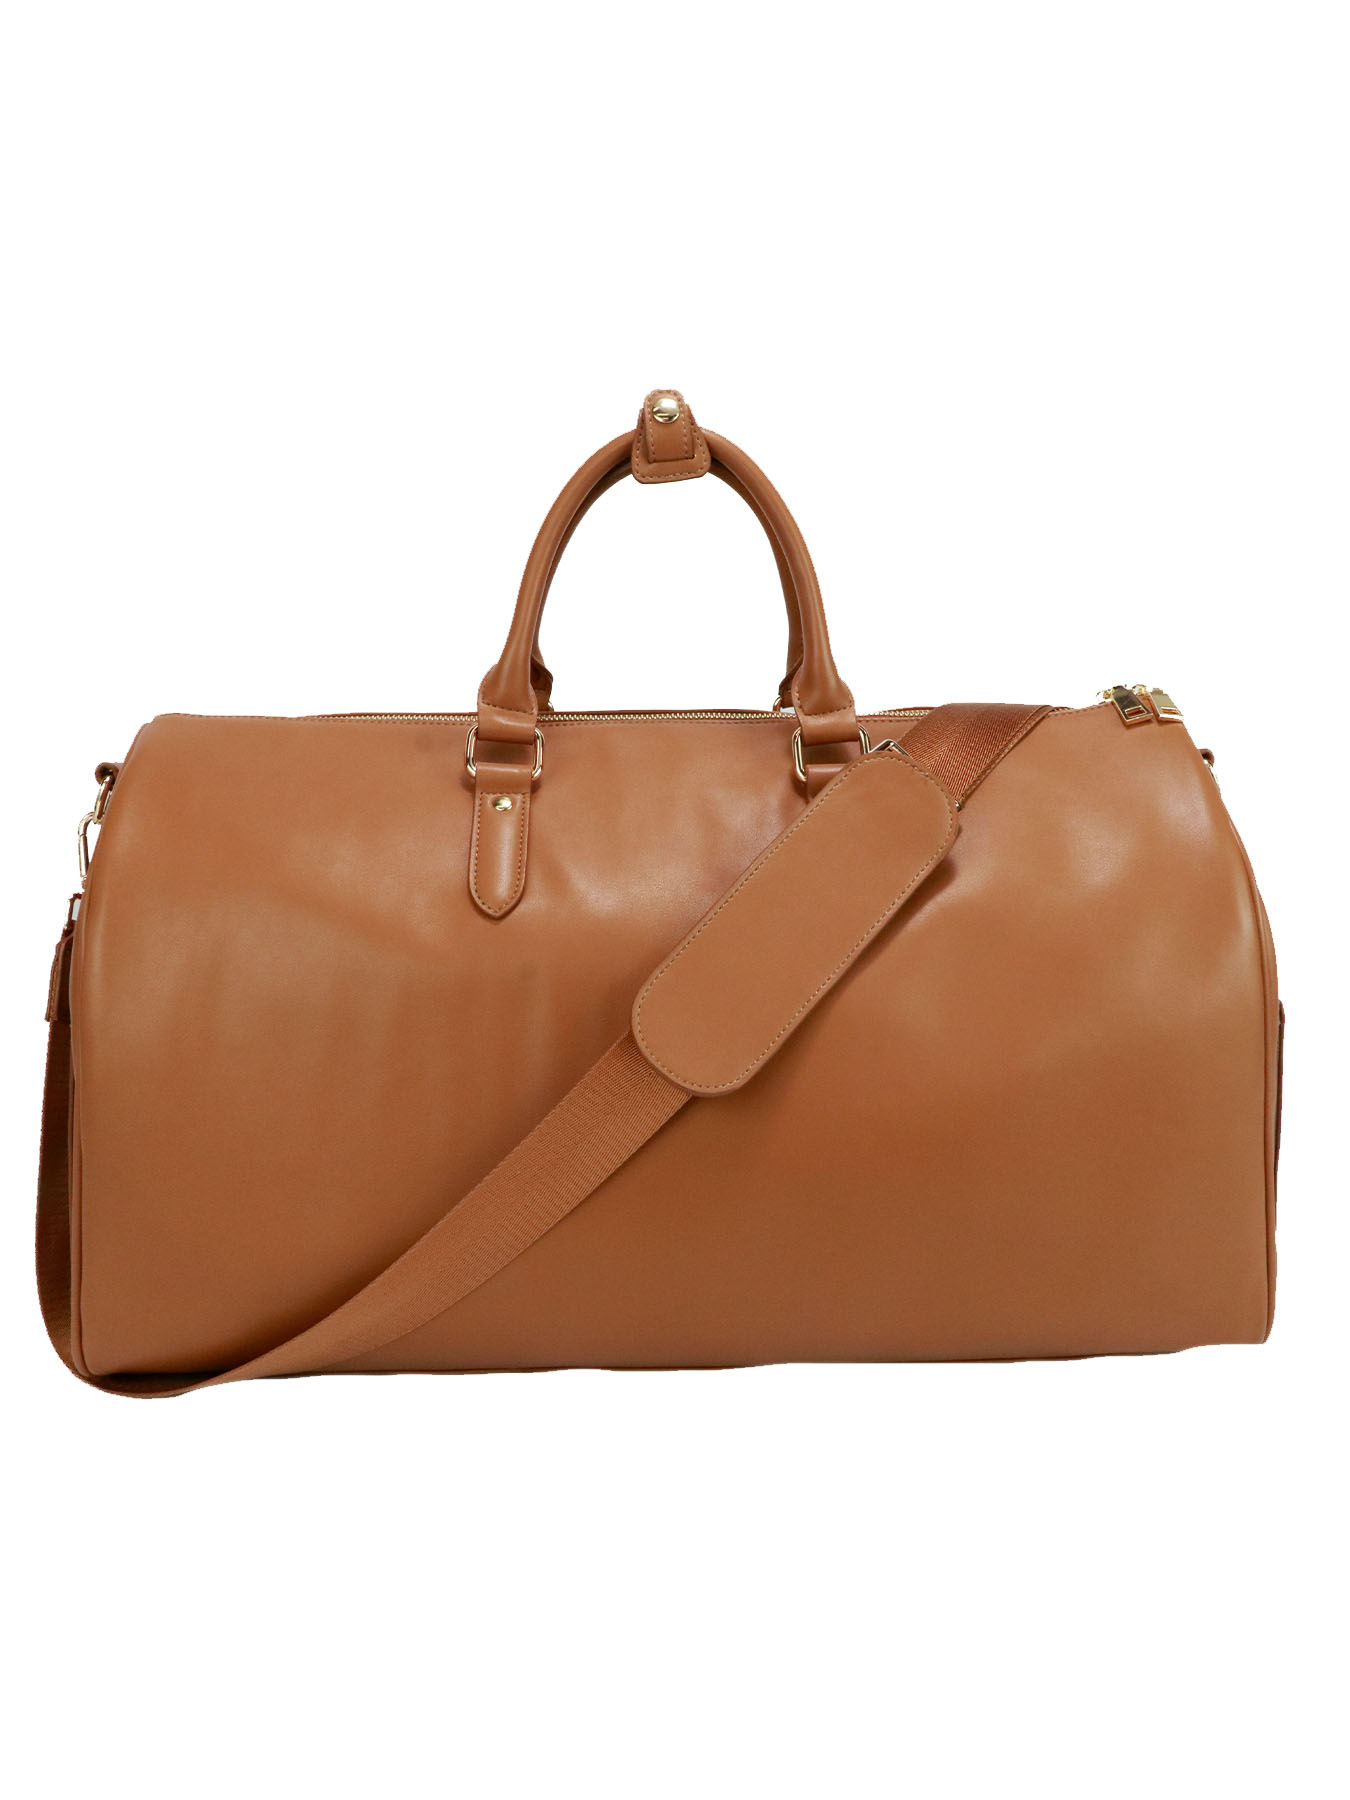 leather travel bag for men